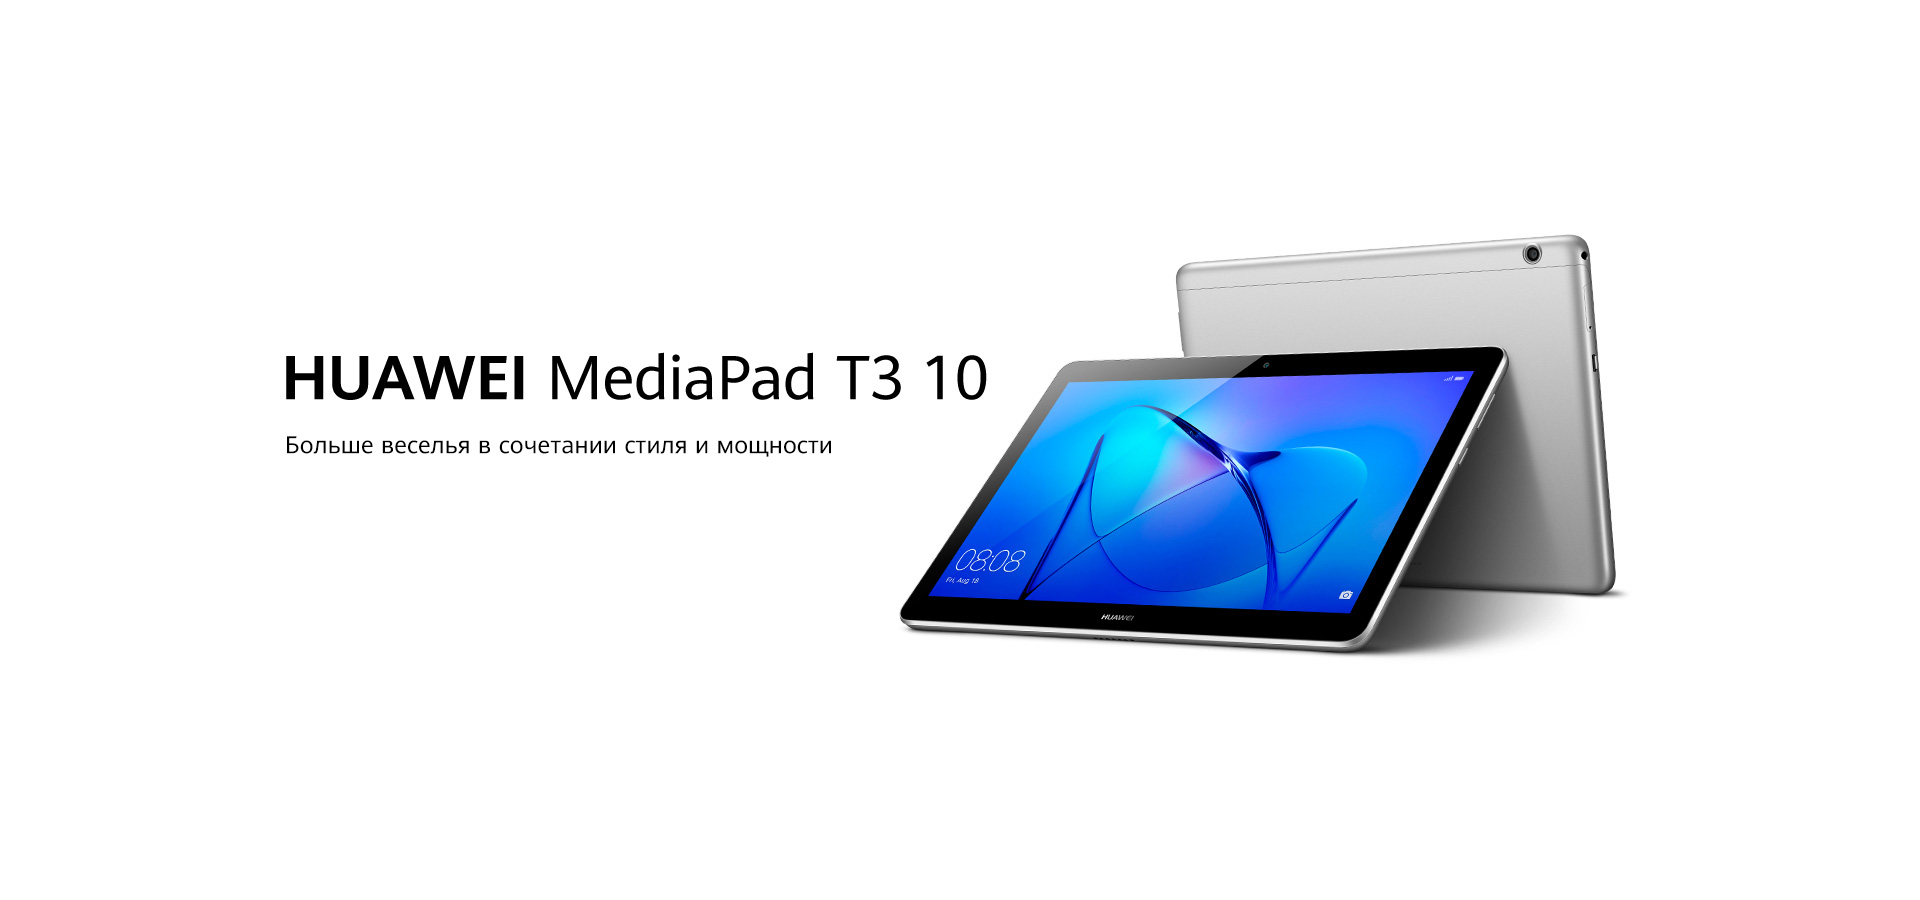 MediaPad T3 10